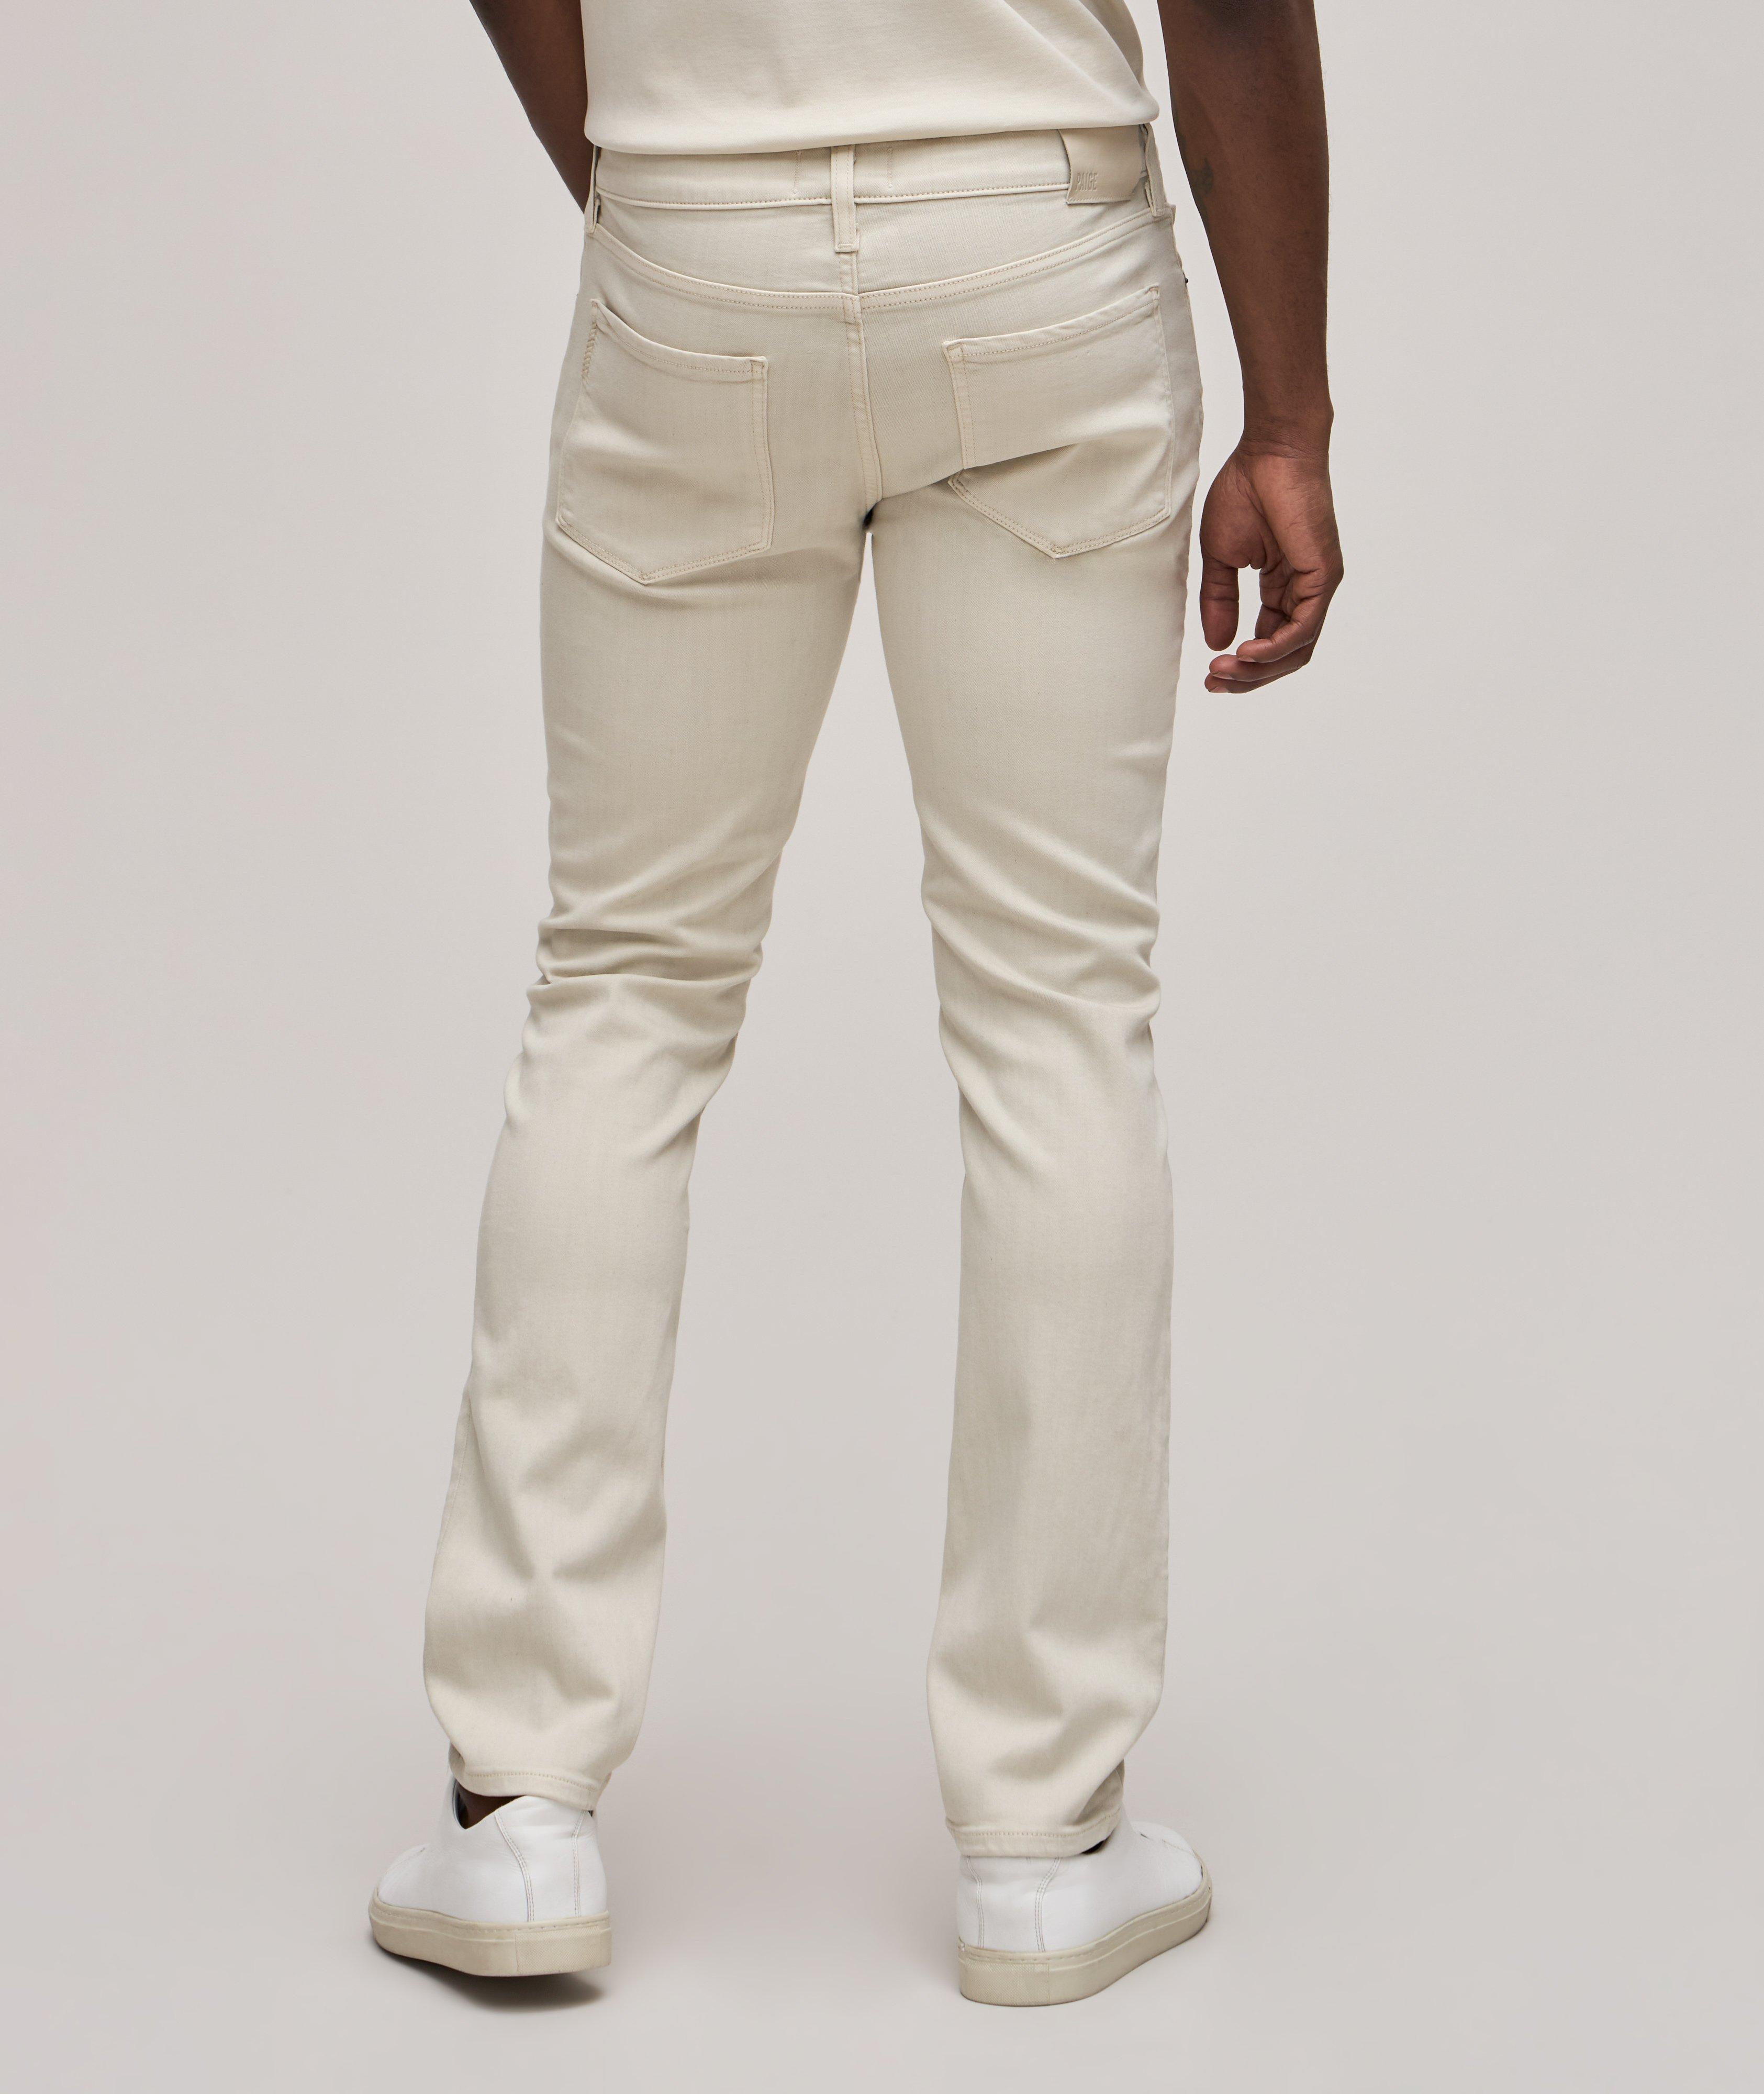 Lennox Slim Transcend Jeans image 2